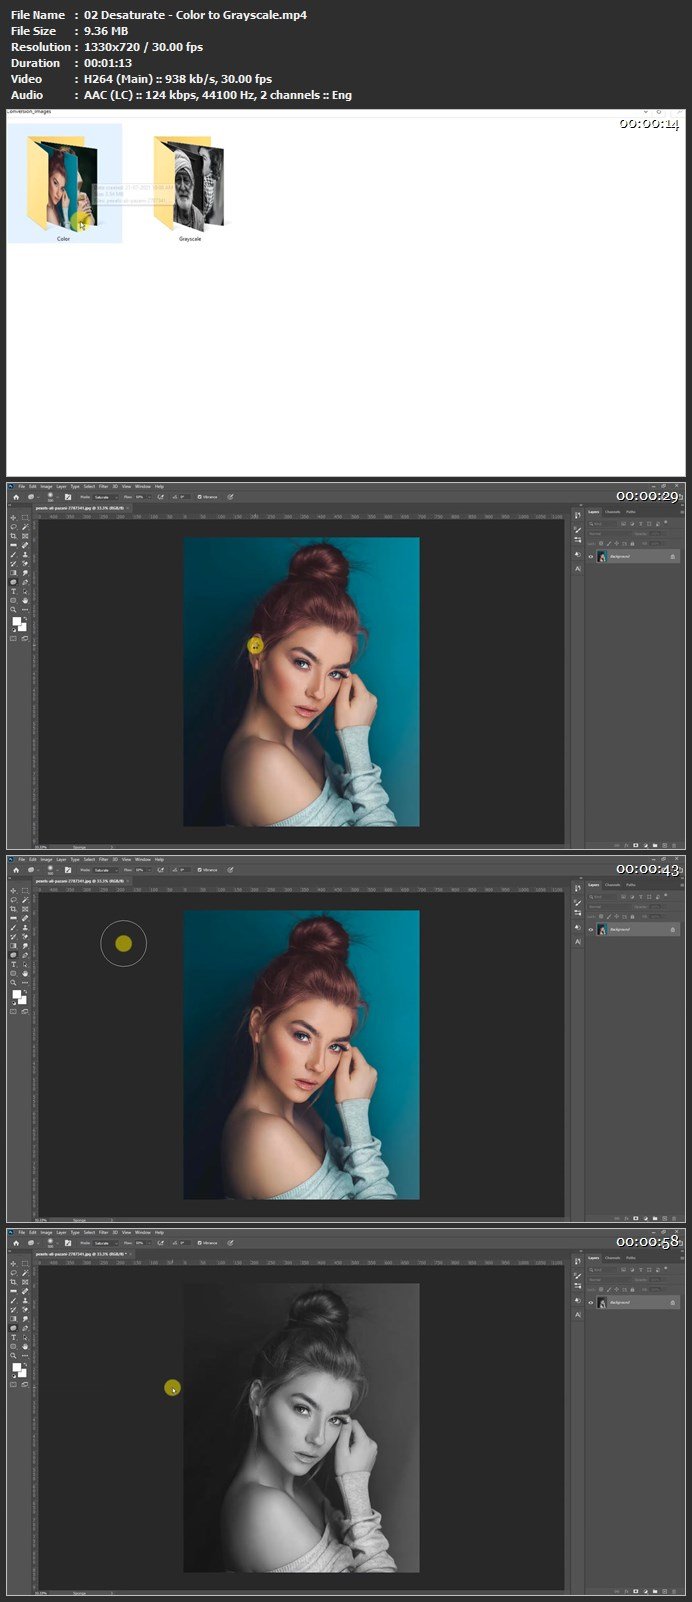 Learn Image Color Conversion Techniques using Photoshop 2021